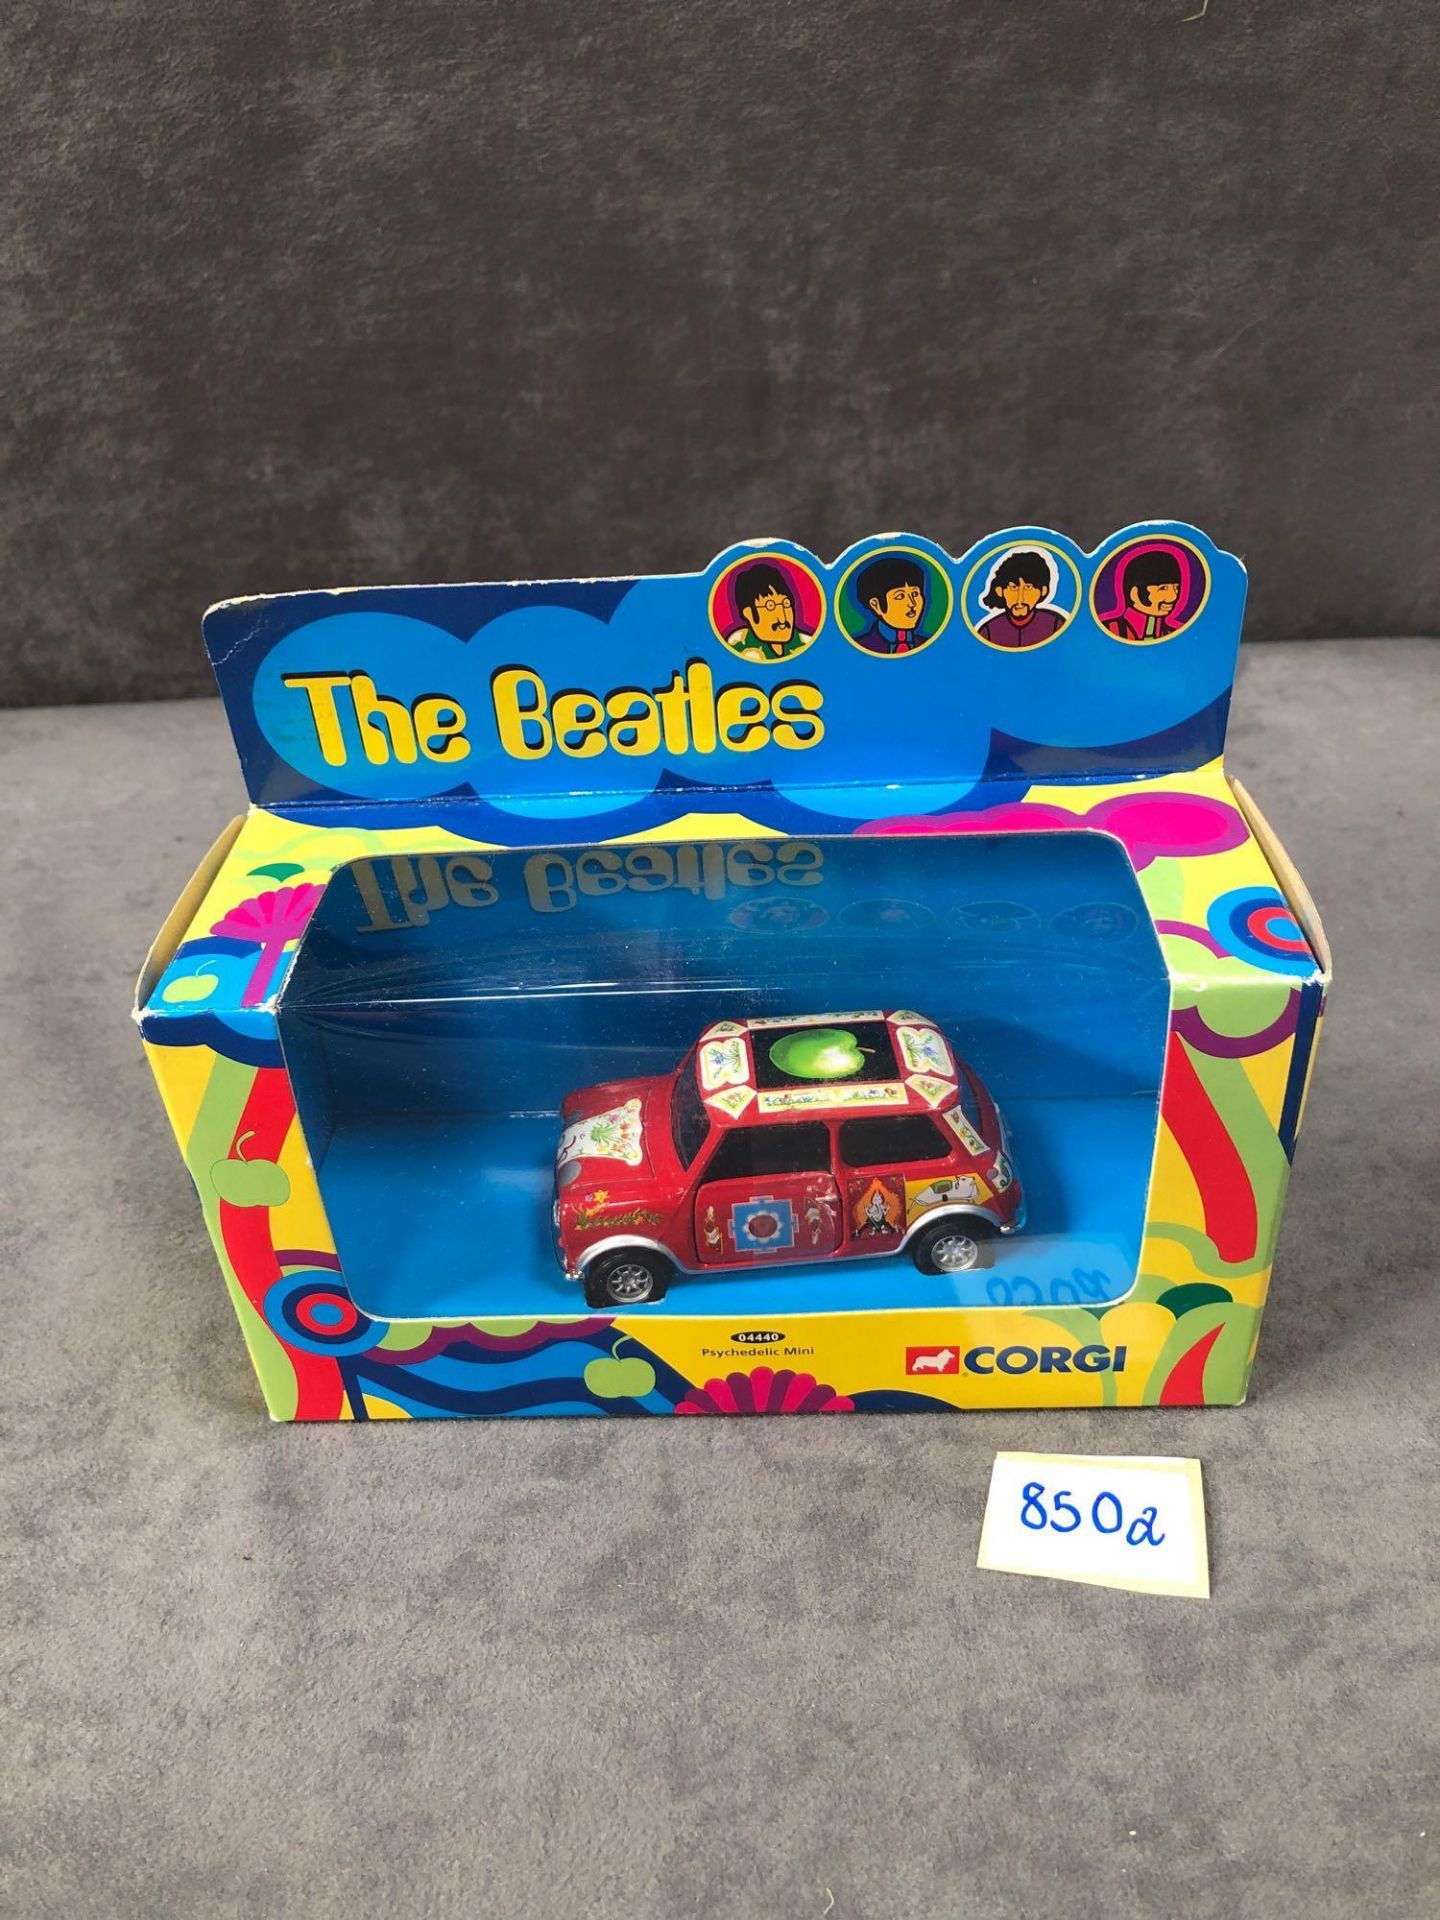 The Beatles Corgi Model Mini-04440-1/36 Scale Psychedelic Mini In Box